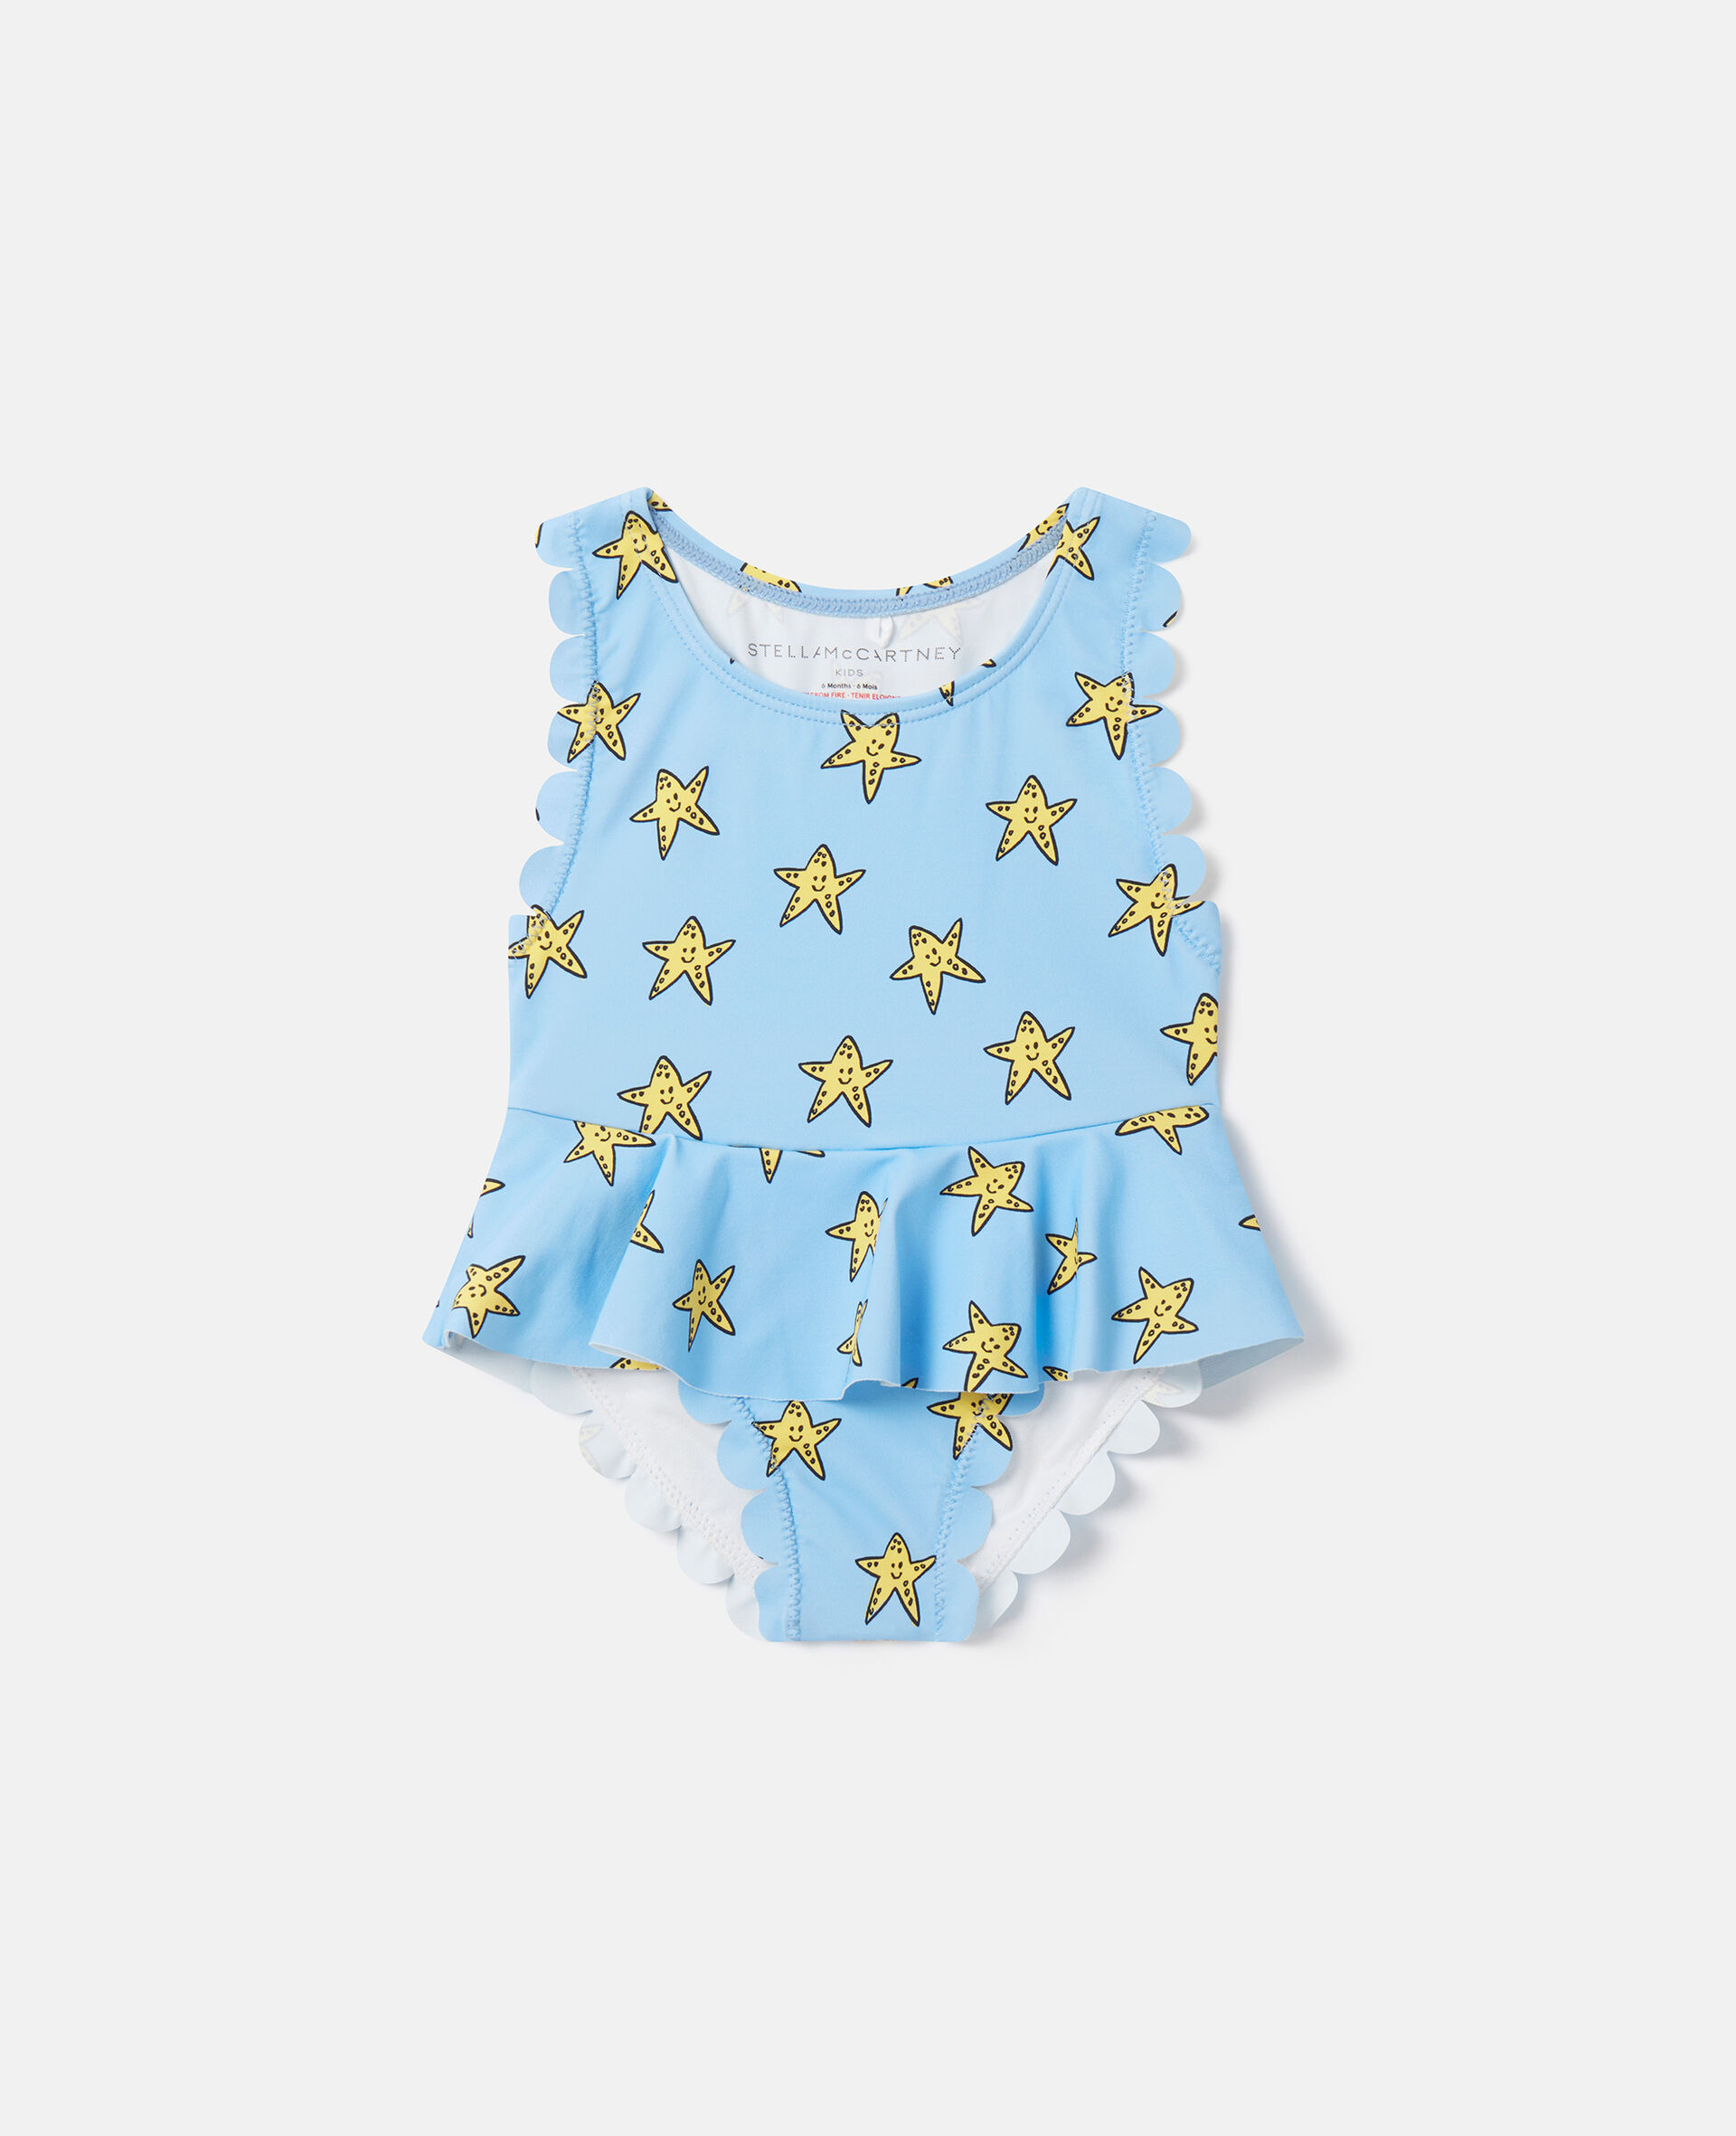 Smiling Stella Star Print Swimsuit-Bleu-medium